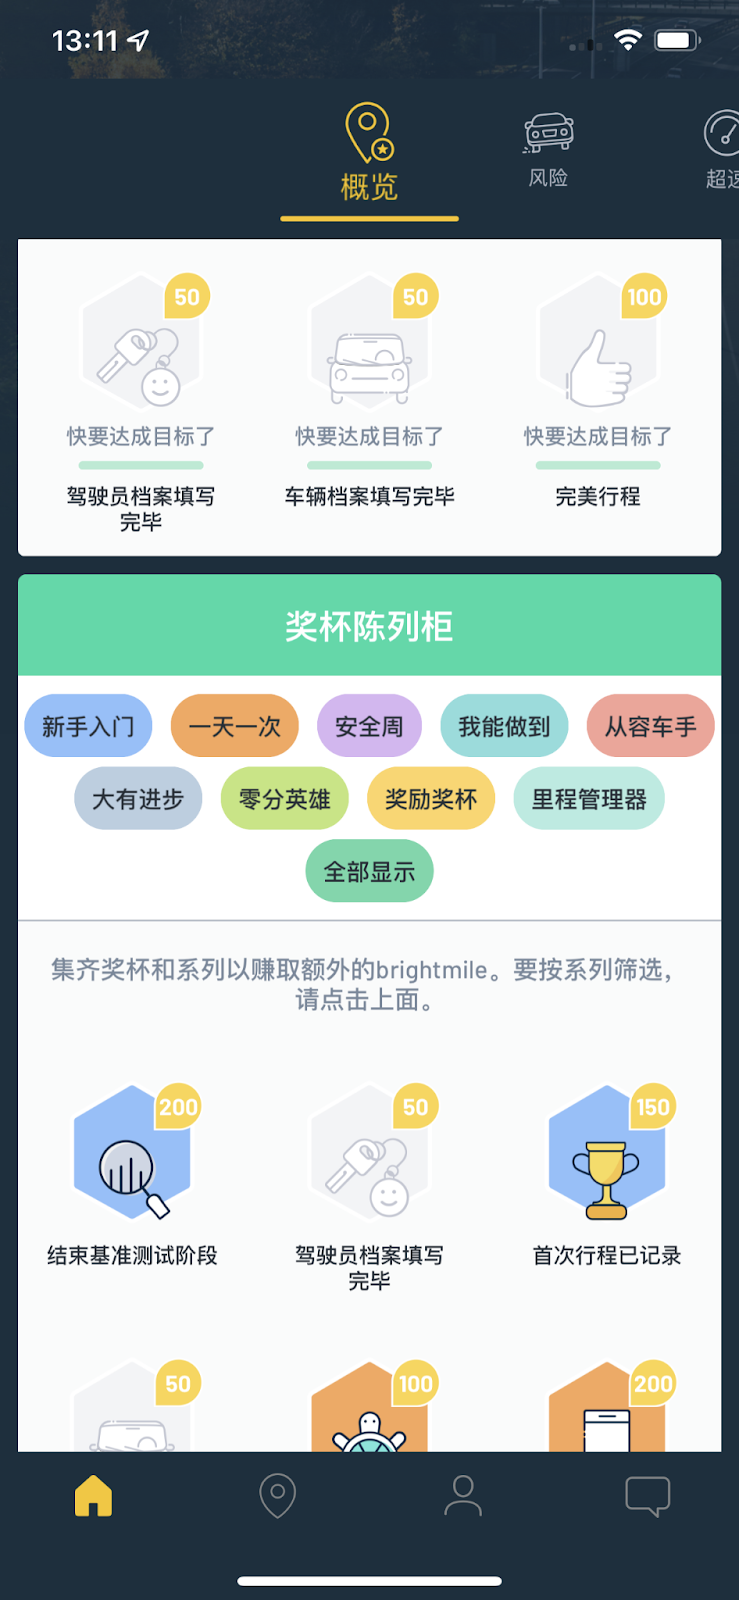 Chinese App